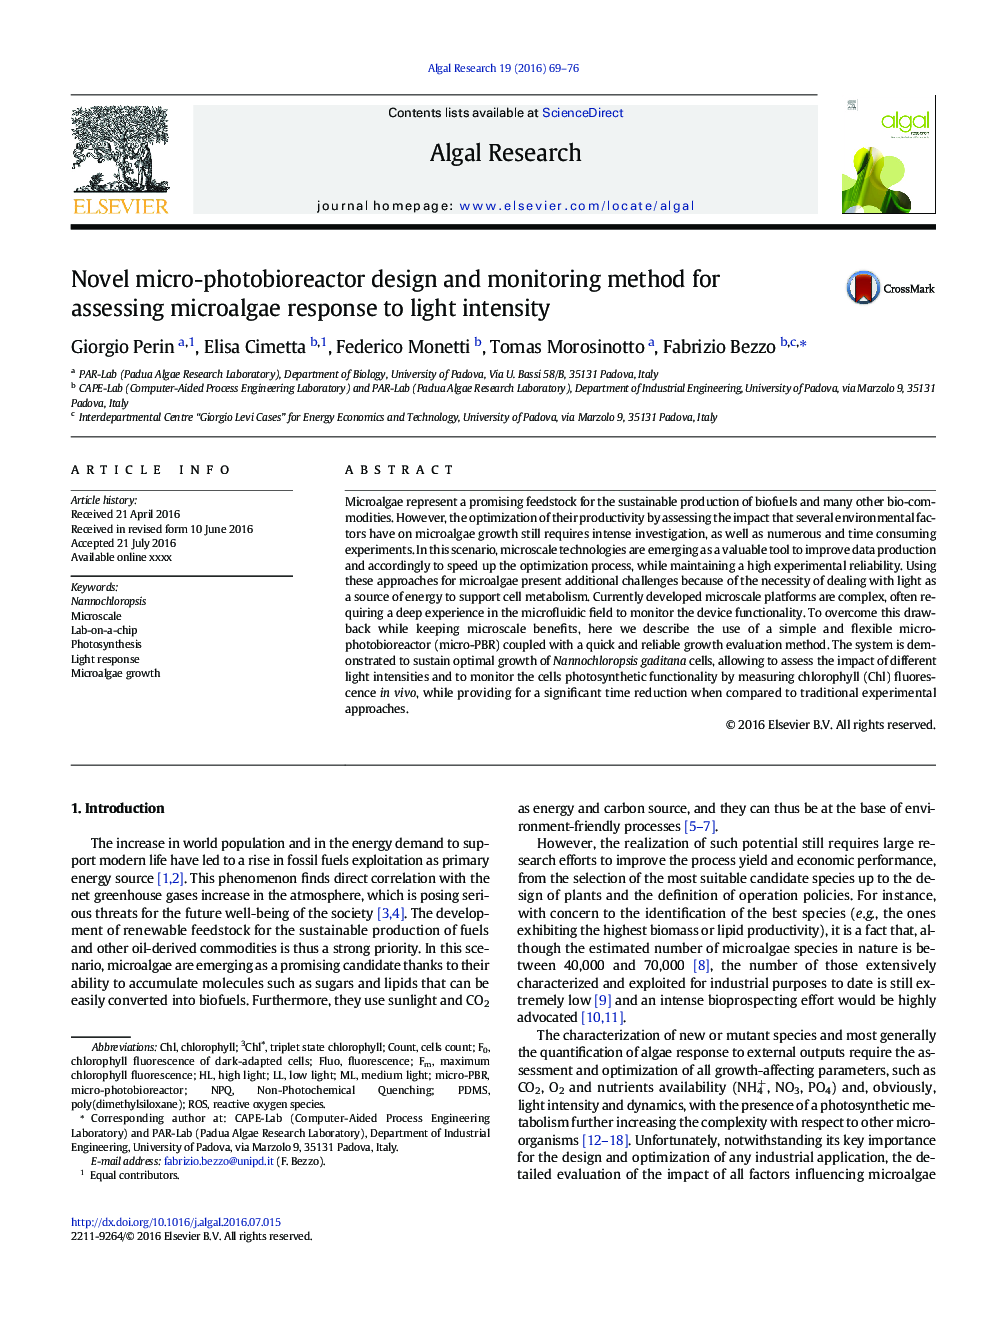 Novel micro-photobioreactor design and monitoring method for assessing microalgae response to light intensity